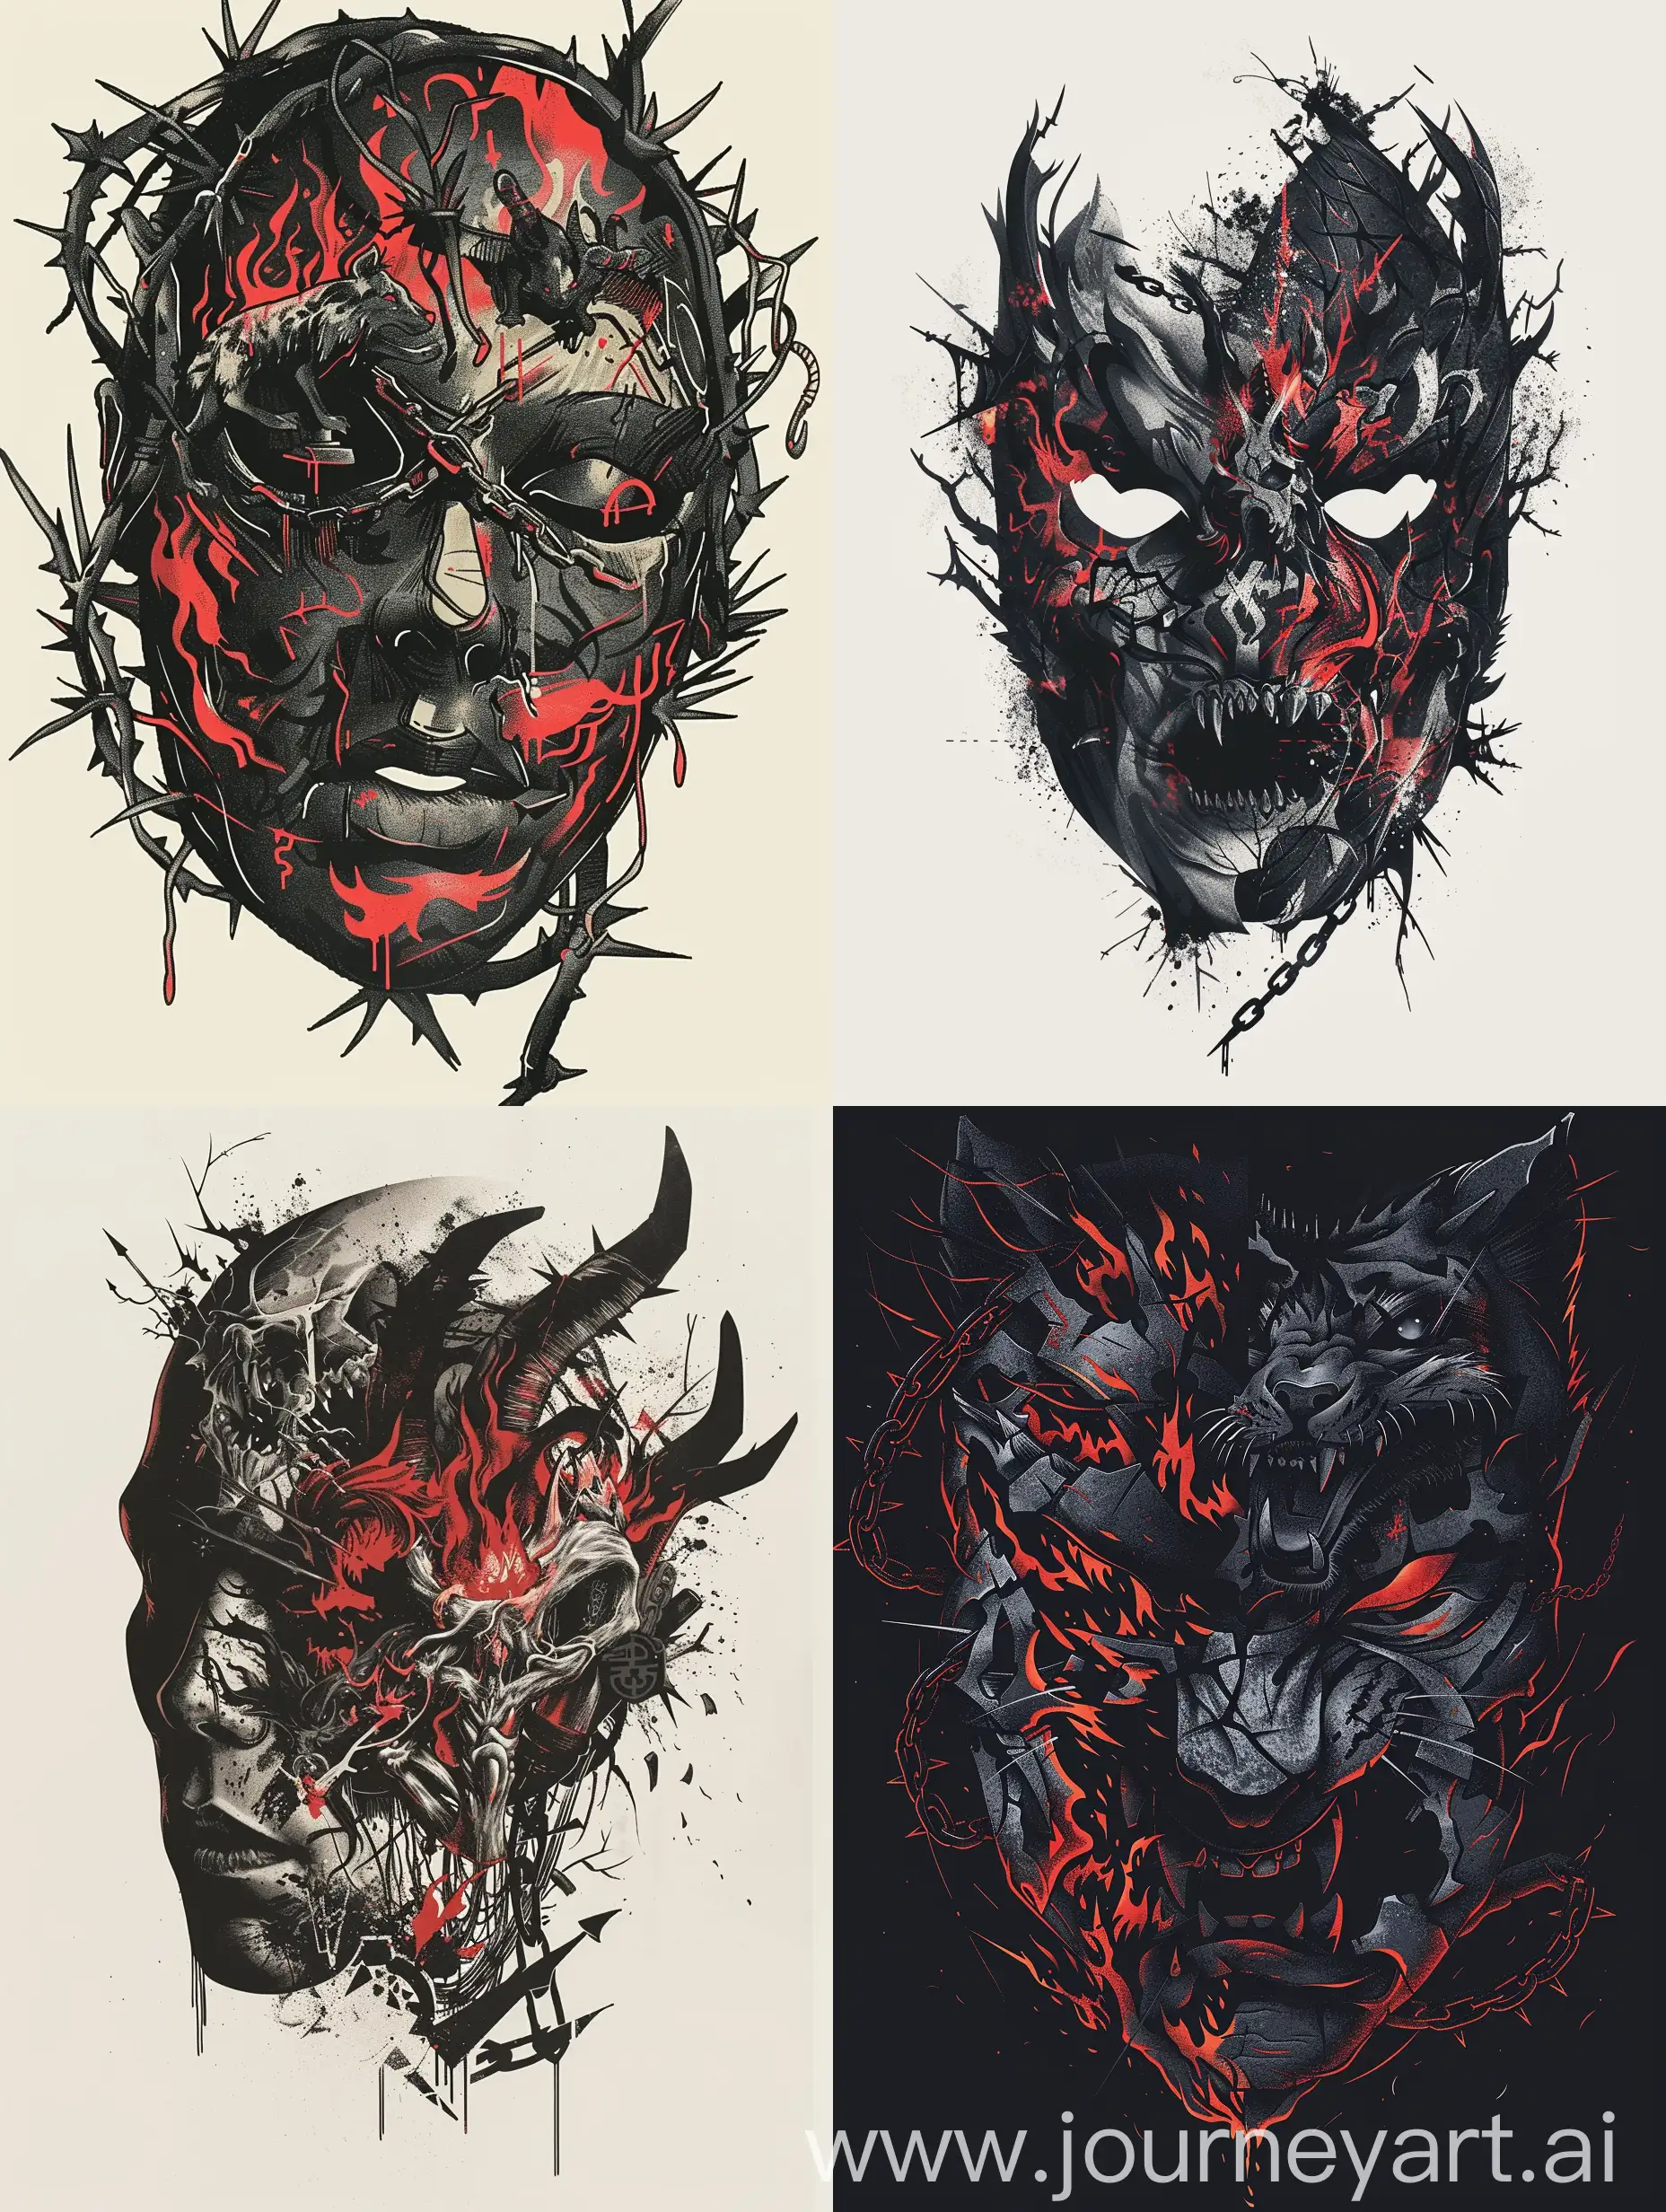 Fierce-Black-and-Red-Graffiti-Mask-with-Predatory-Elements